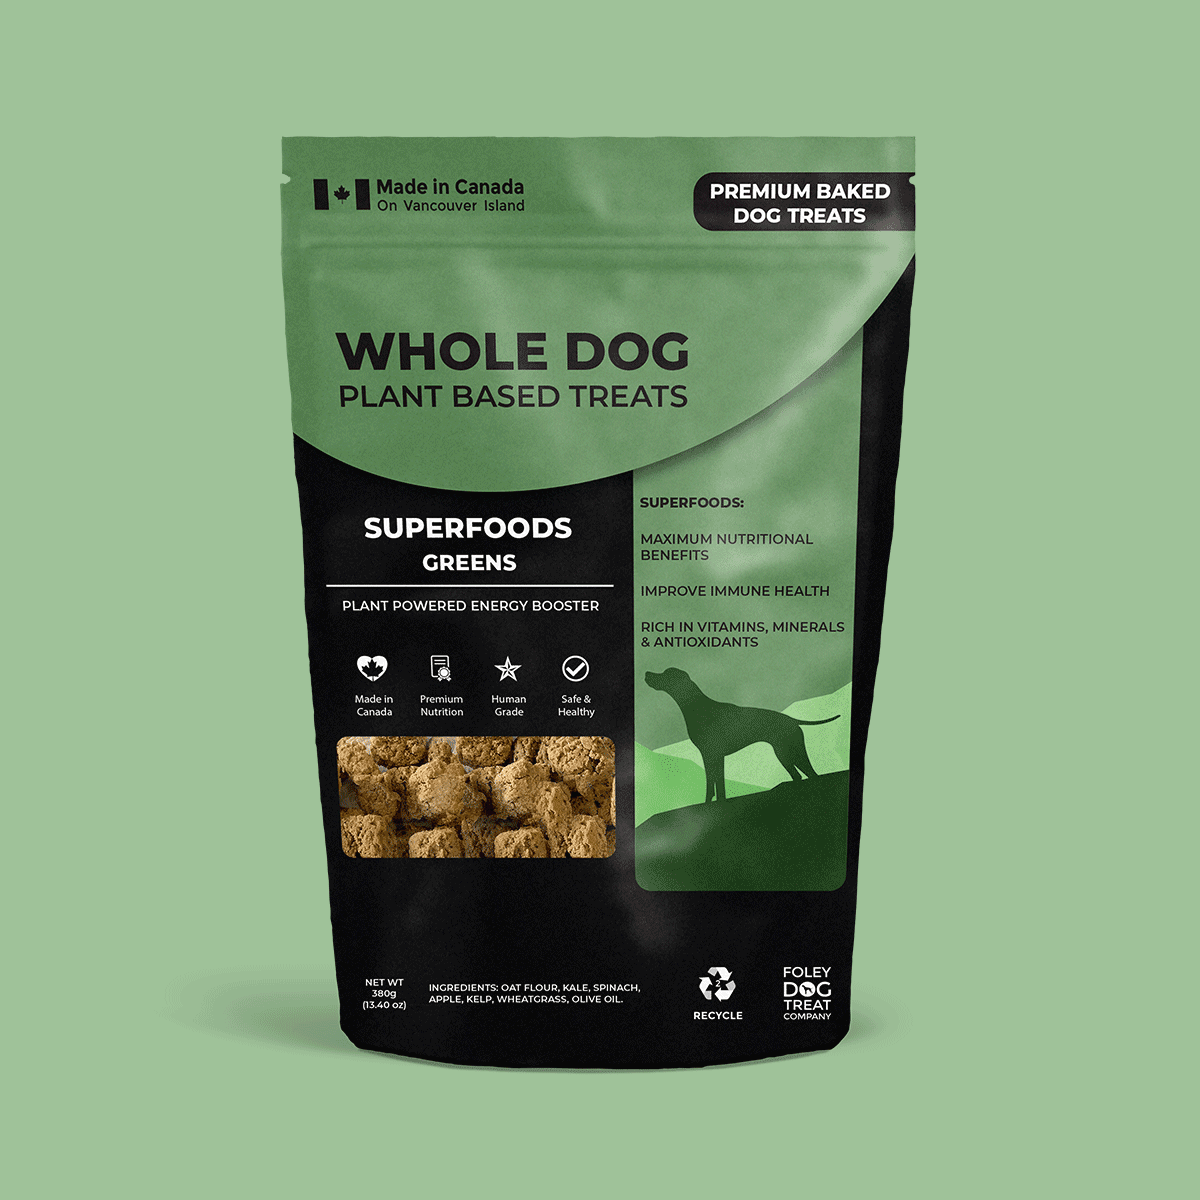 Superfoods Greens - Foley Dog Treat Company